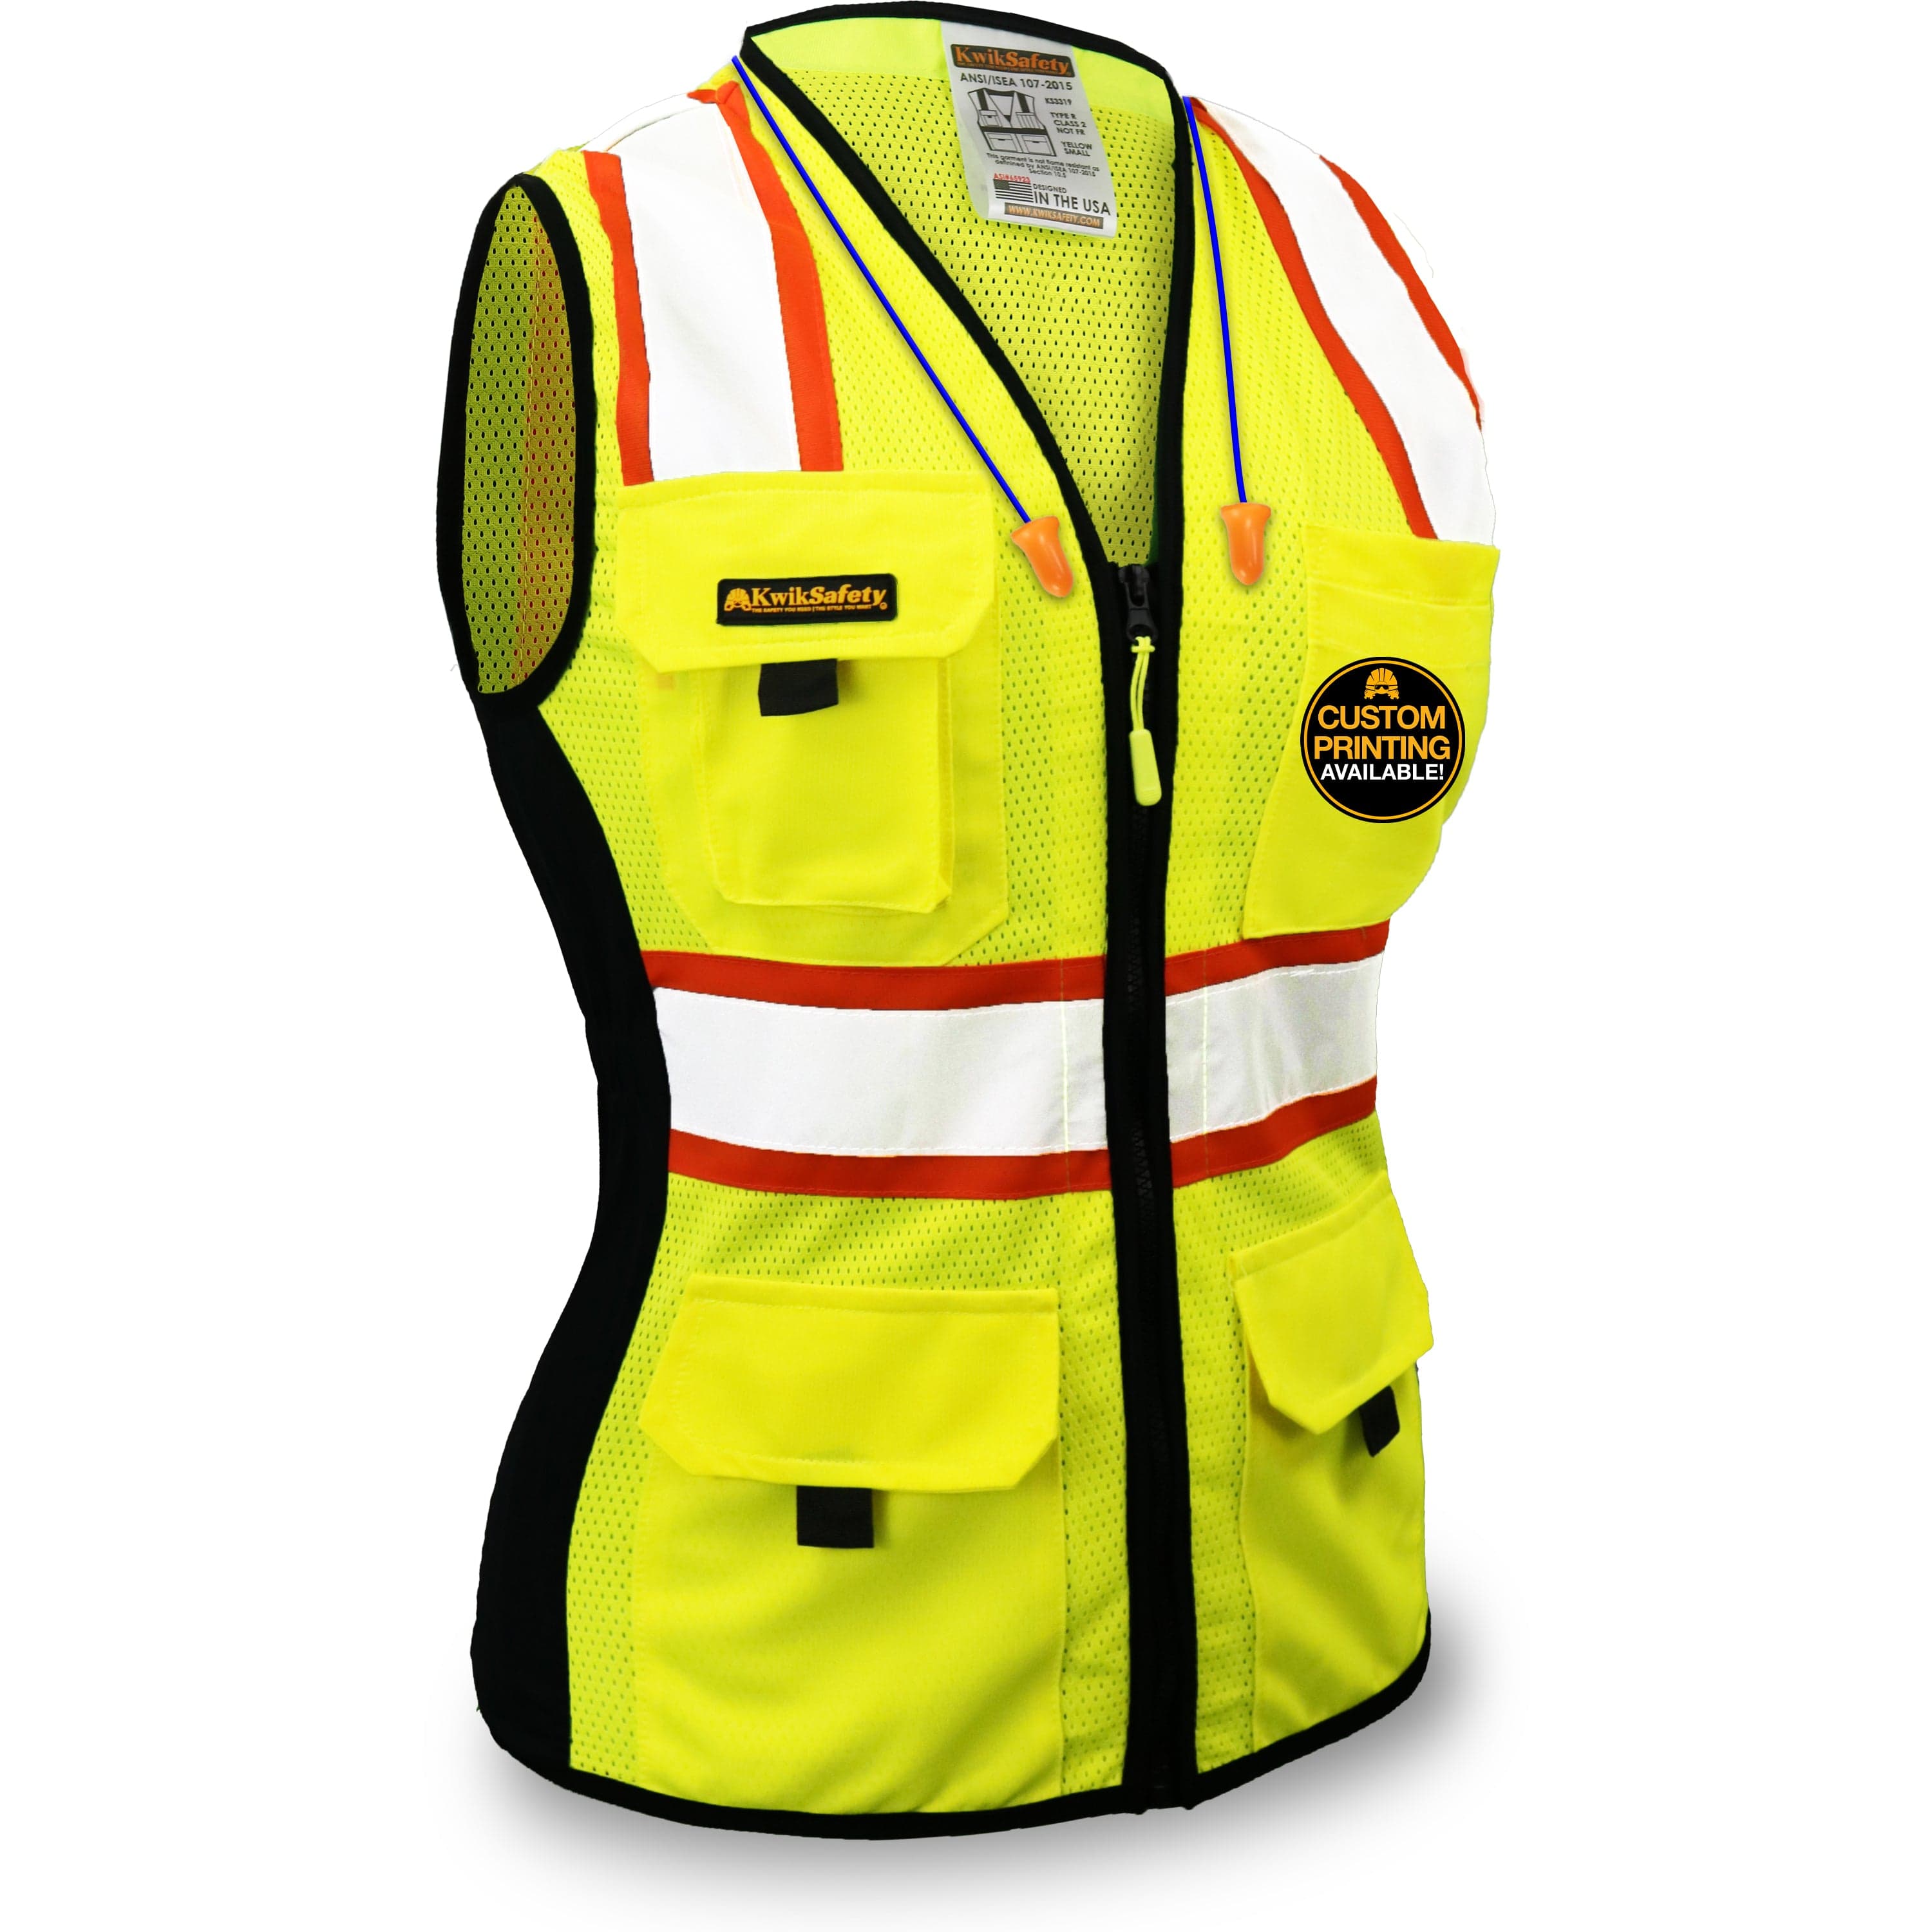 Safety Reflective Vest MonotaRO Vest Type Safety Vests  Size Free   MonotaRO Vietnam